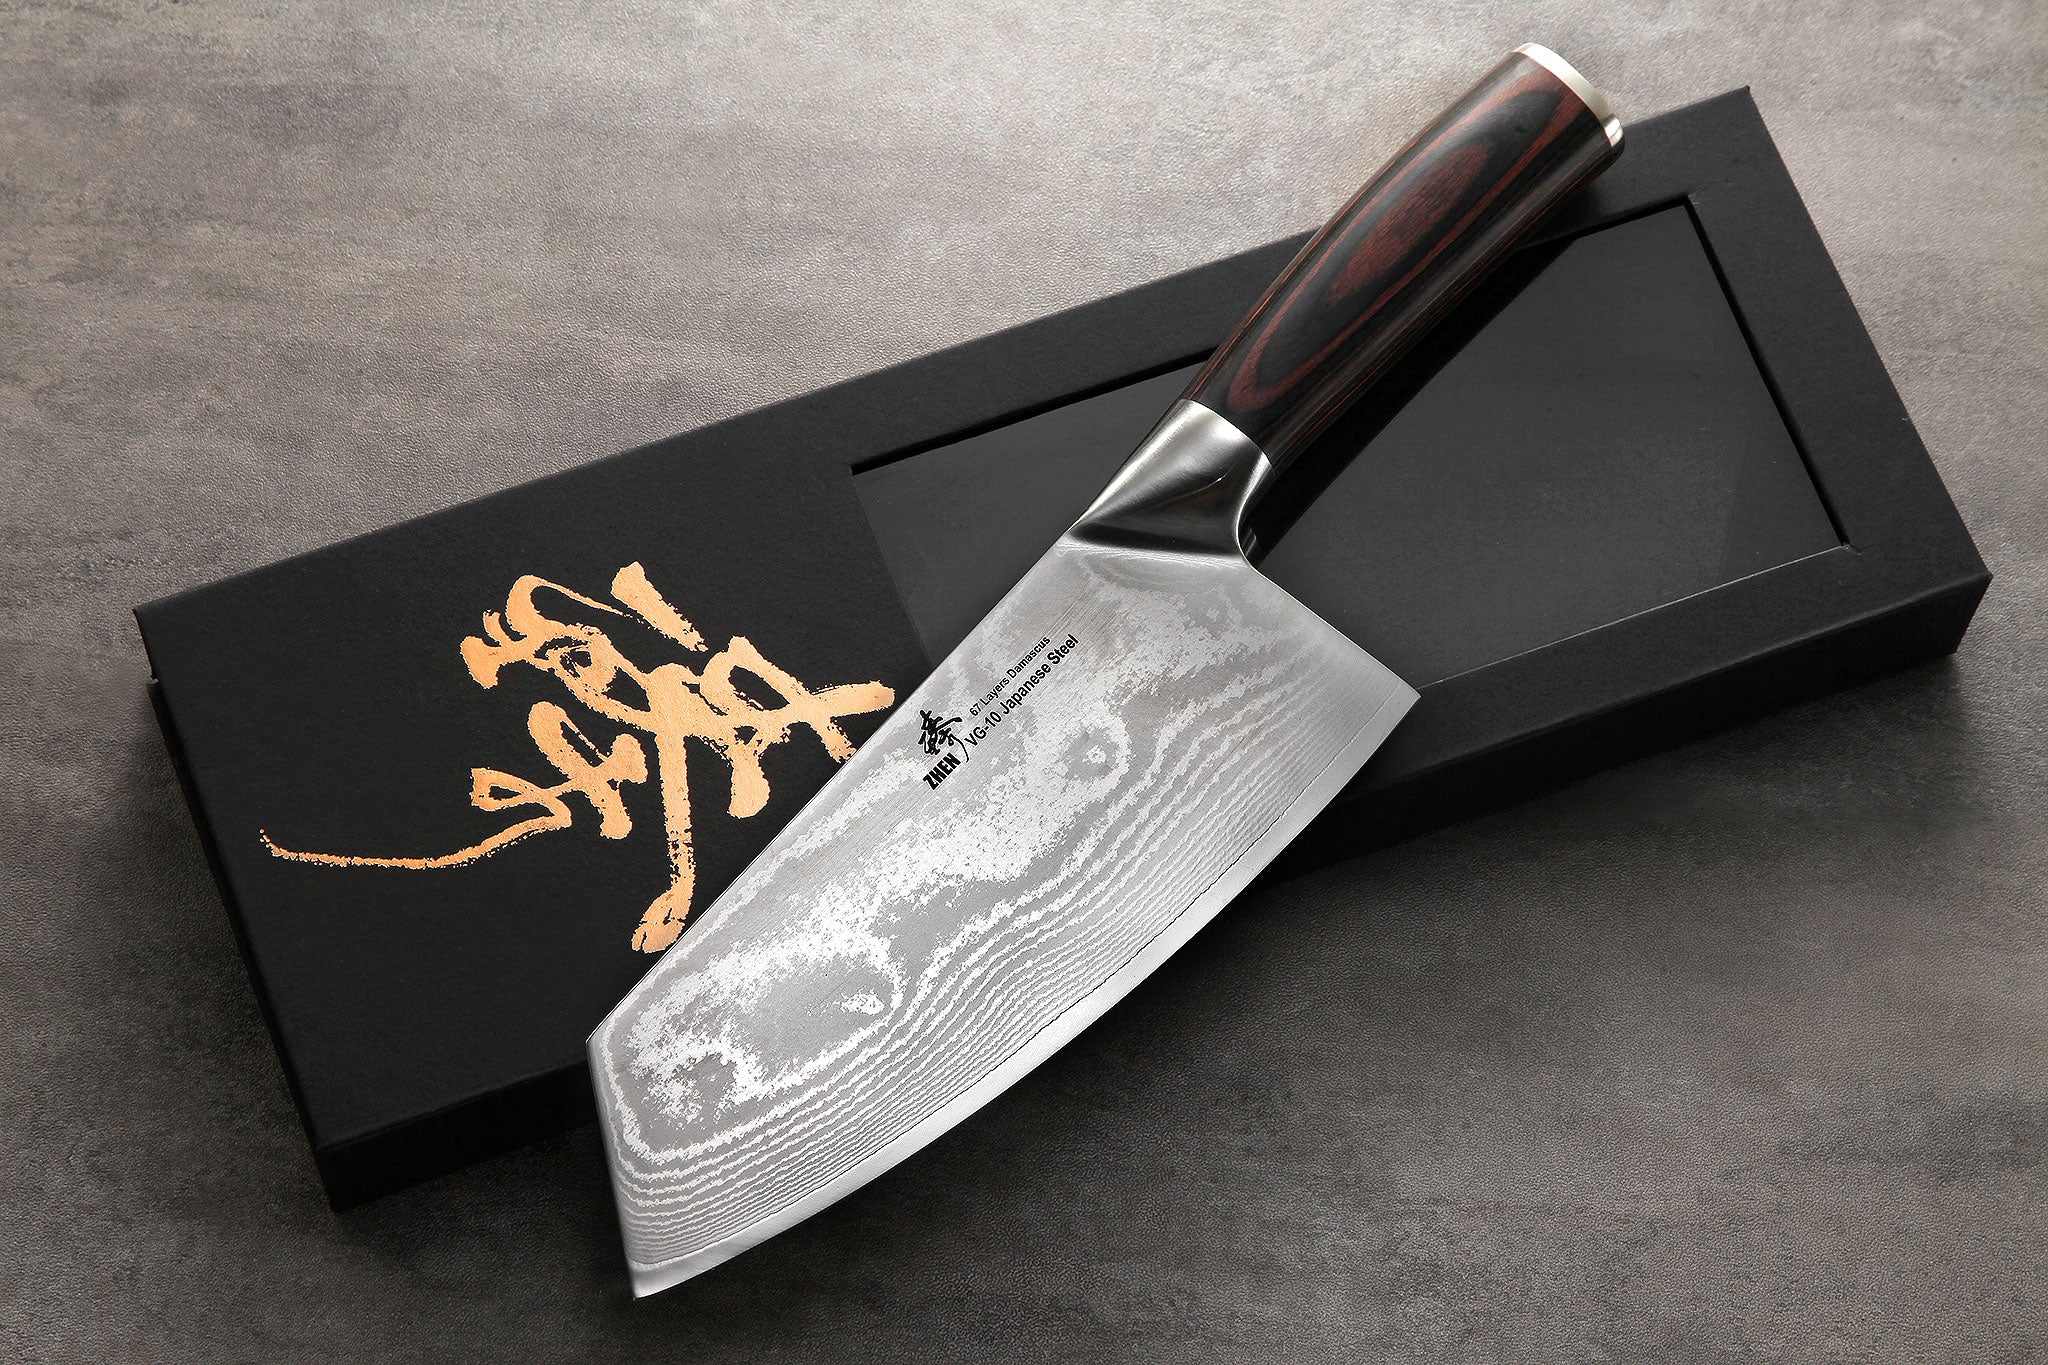 67-layer Damascus Steel Chef's Knife Japanese VG10 Steel Kitchen